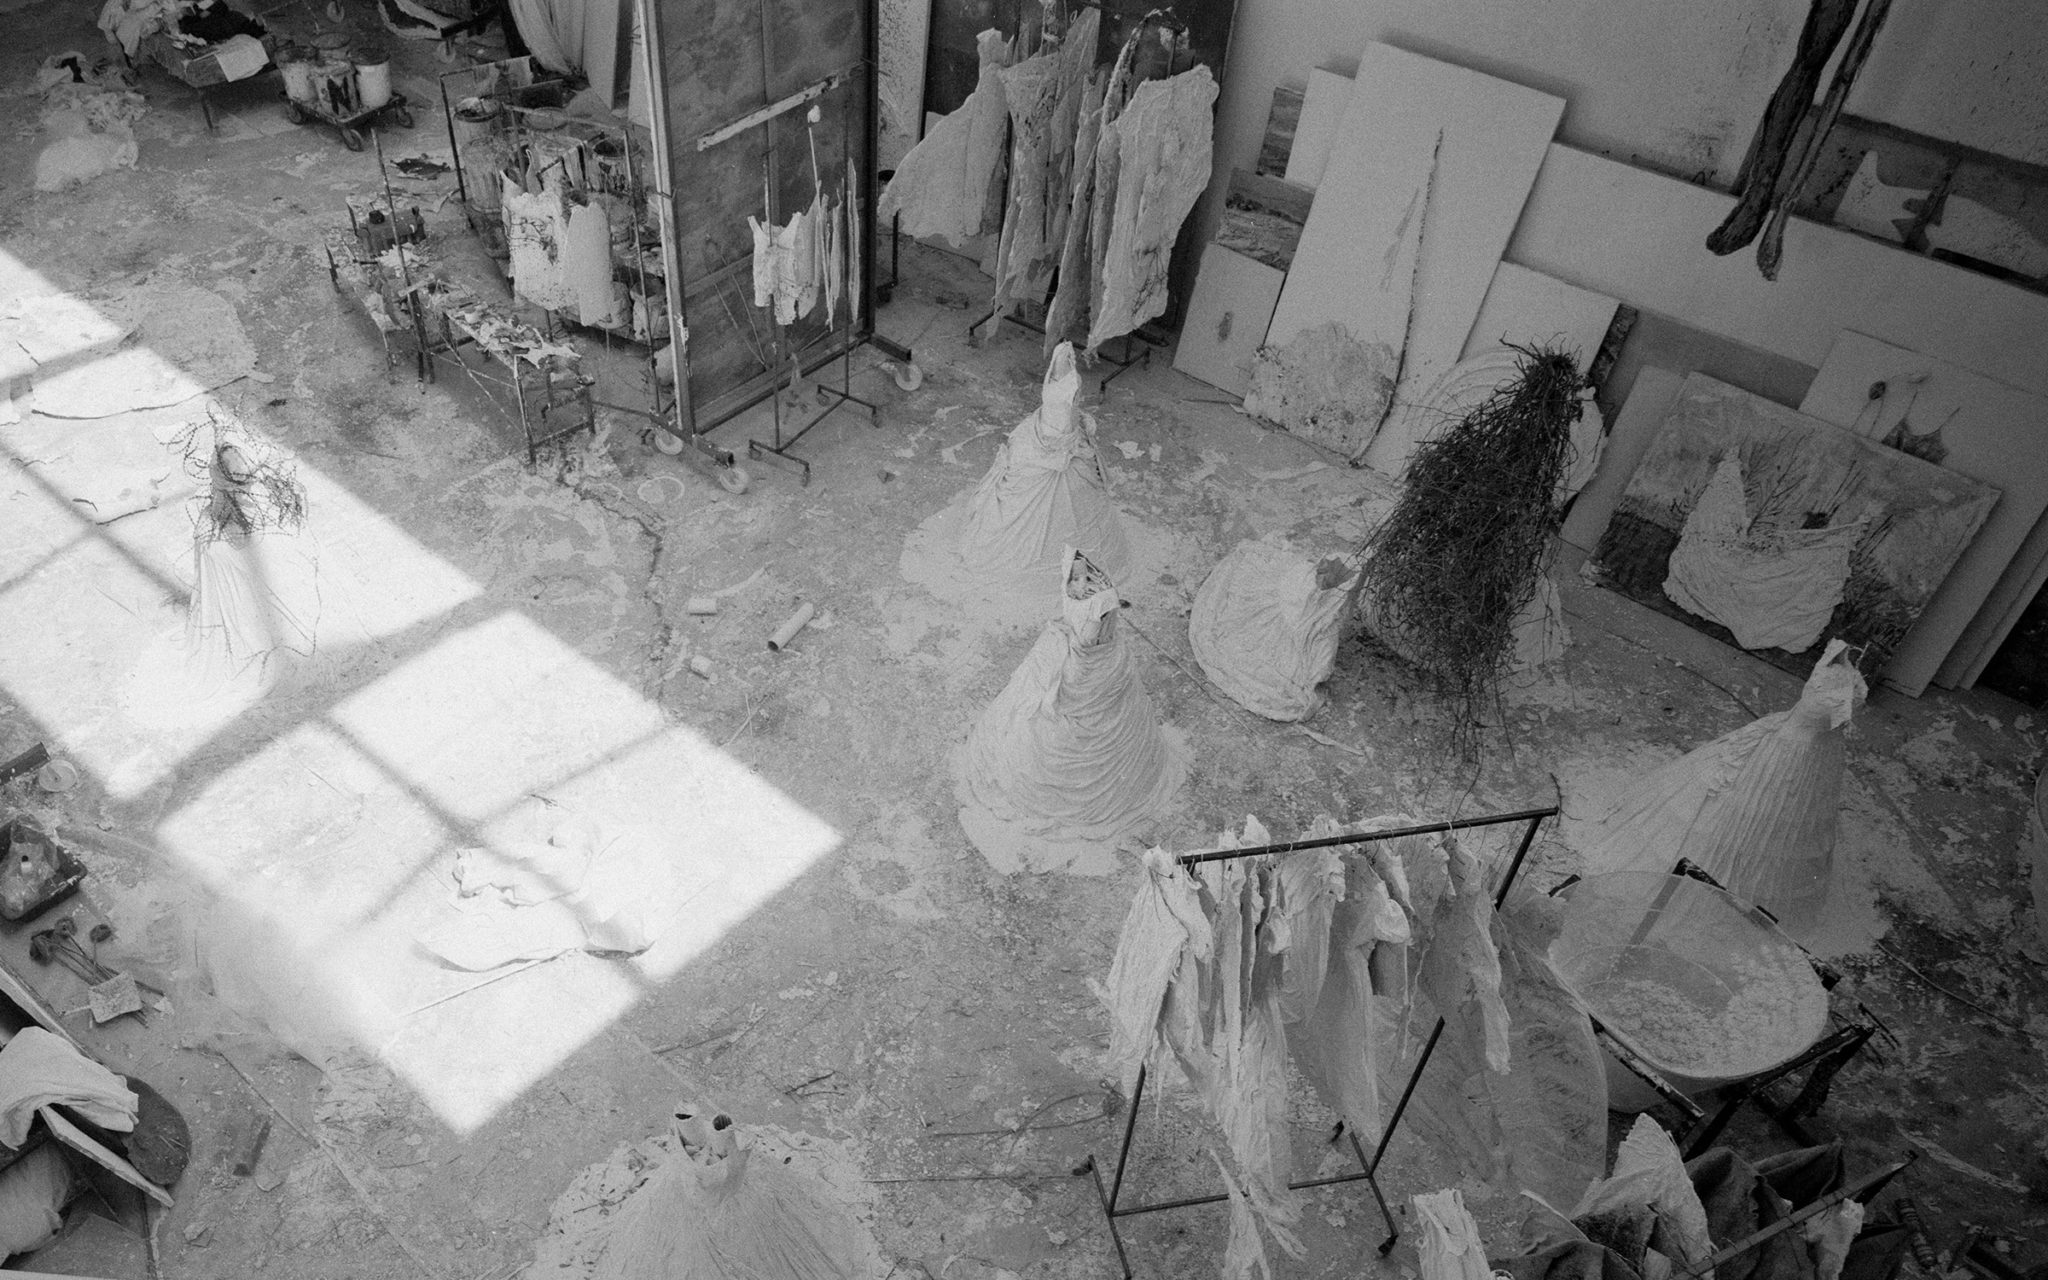 Archive image of Kiefer’s working studio in La Ribaute.